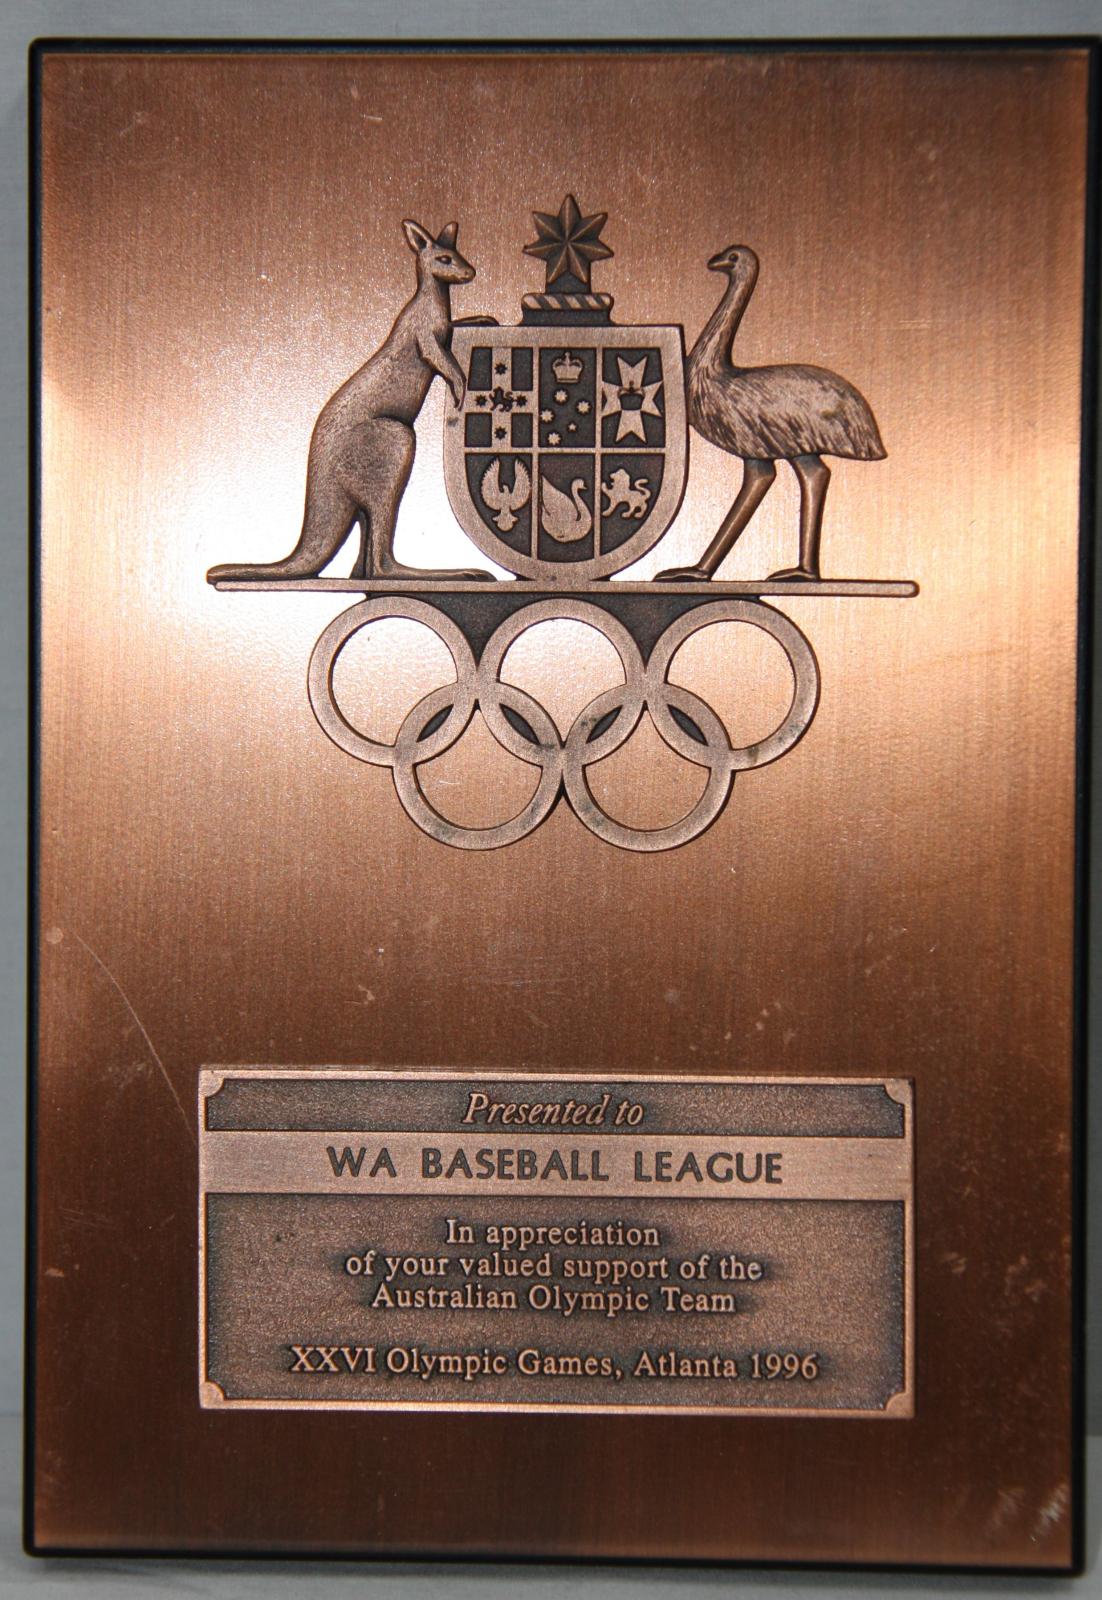 1996 Australian Olympic Committee plaque presented to WA Baseball League